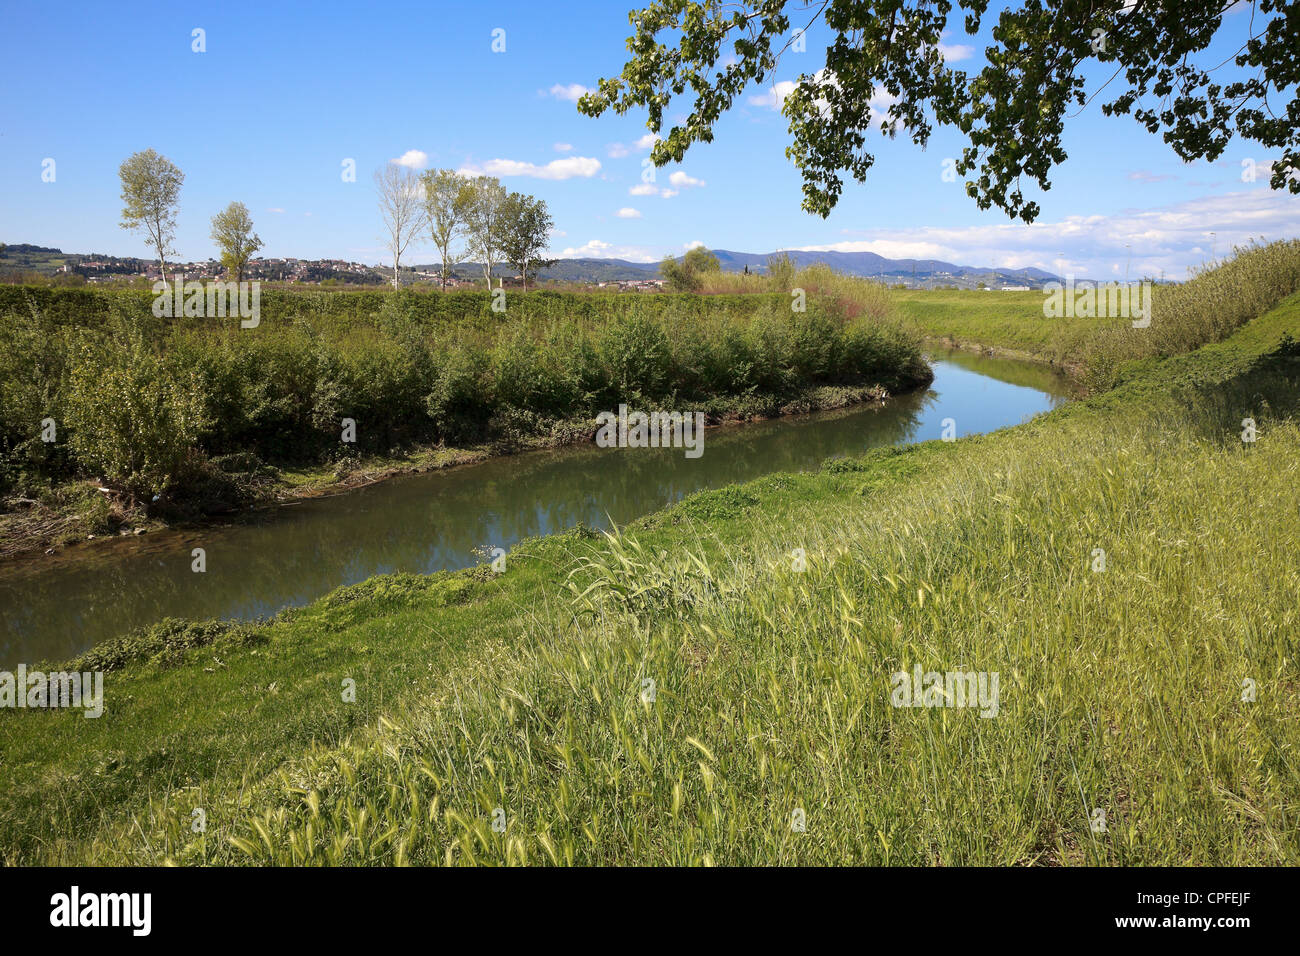 The Bisenzio River, Tuscany Stock Photo